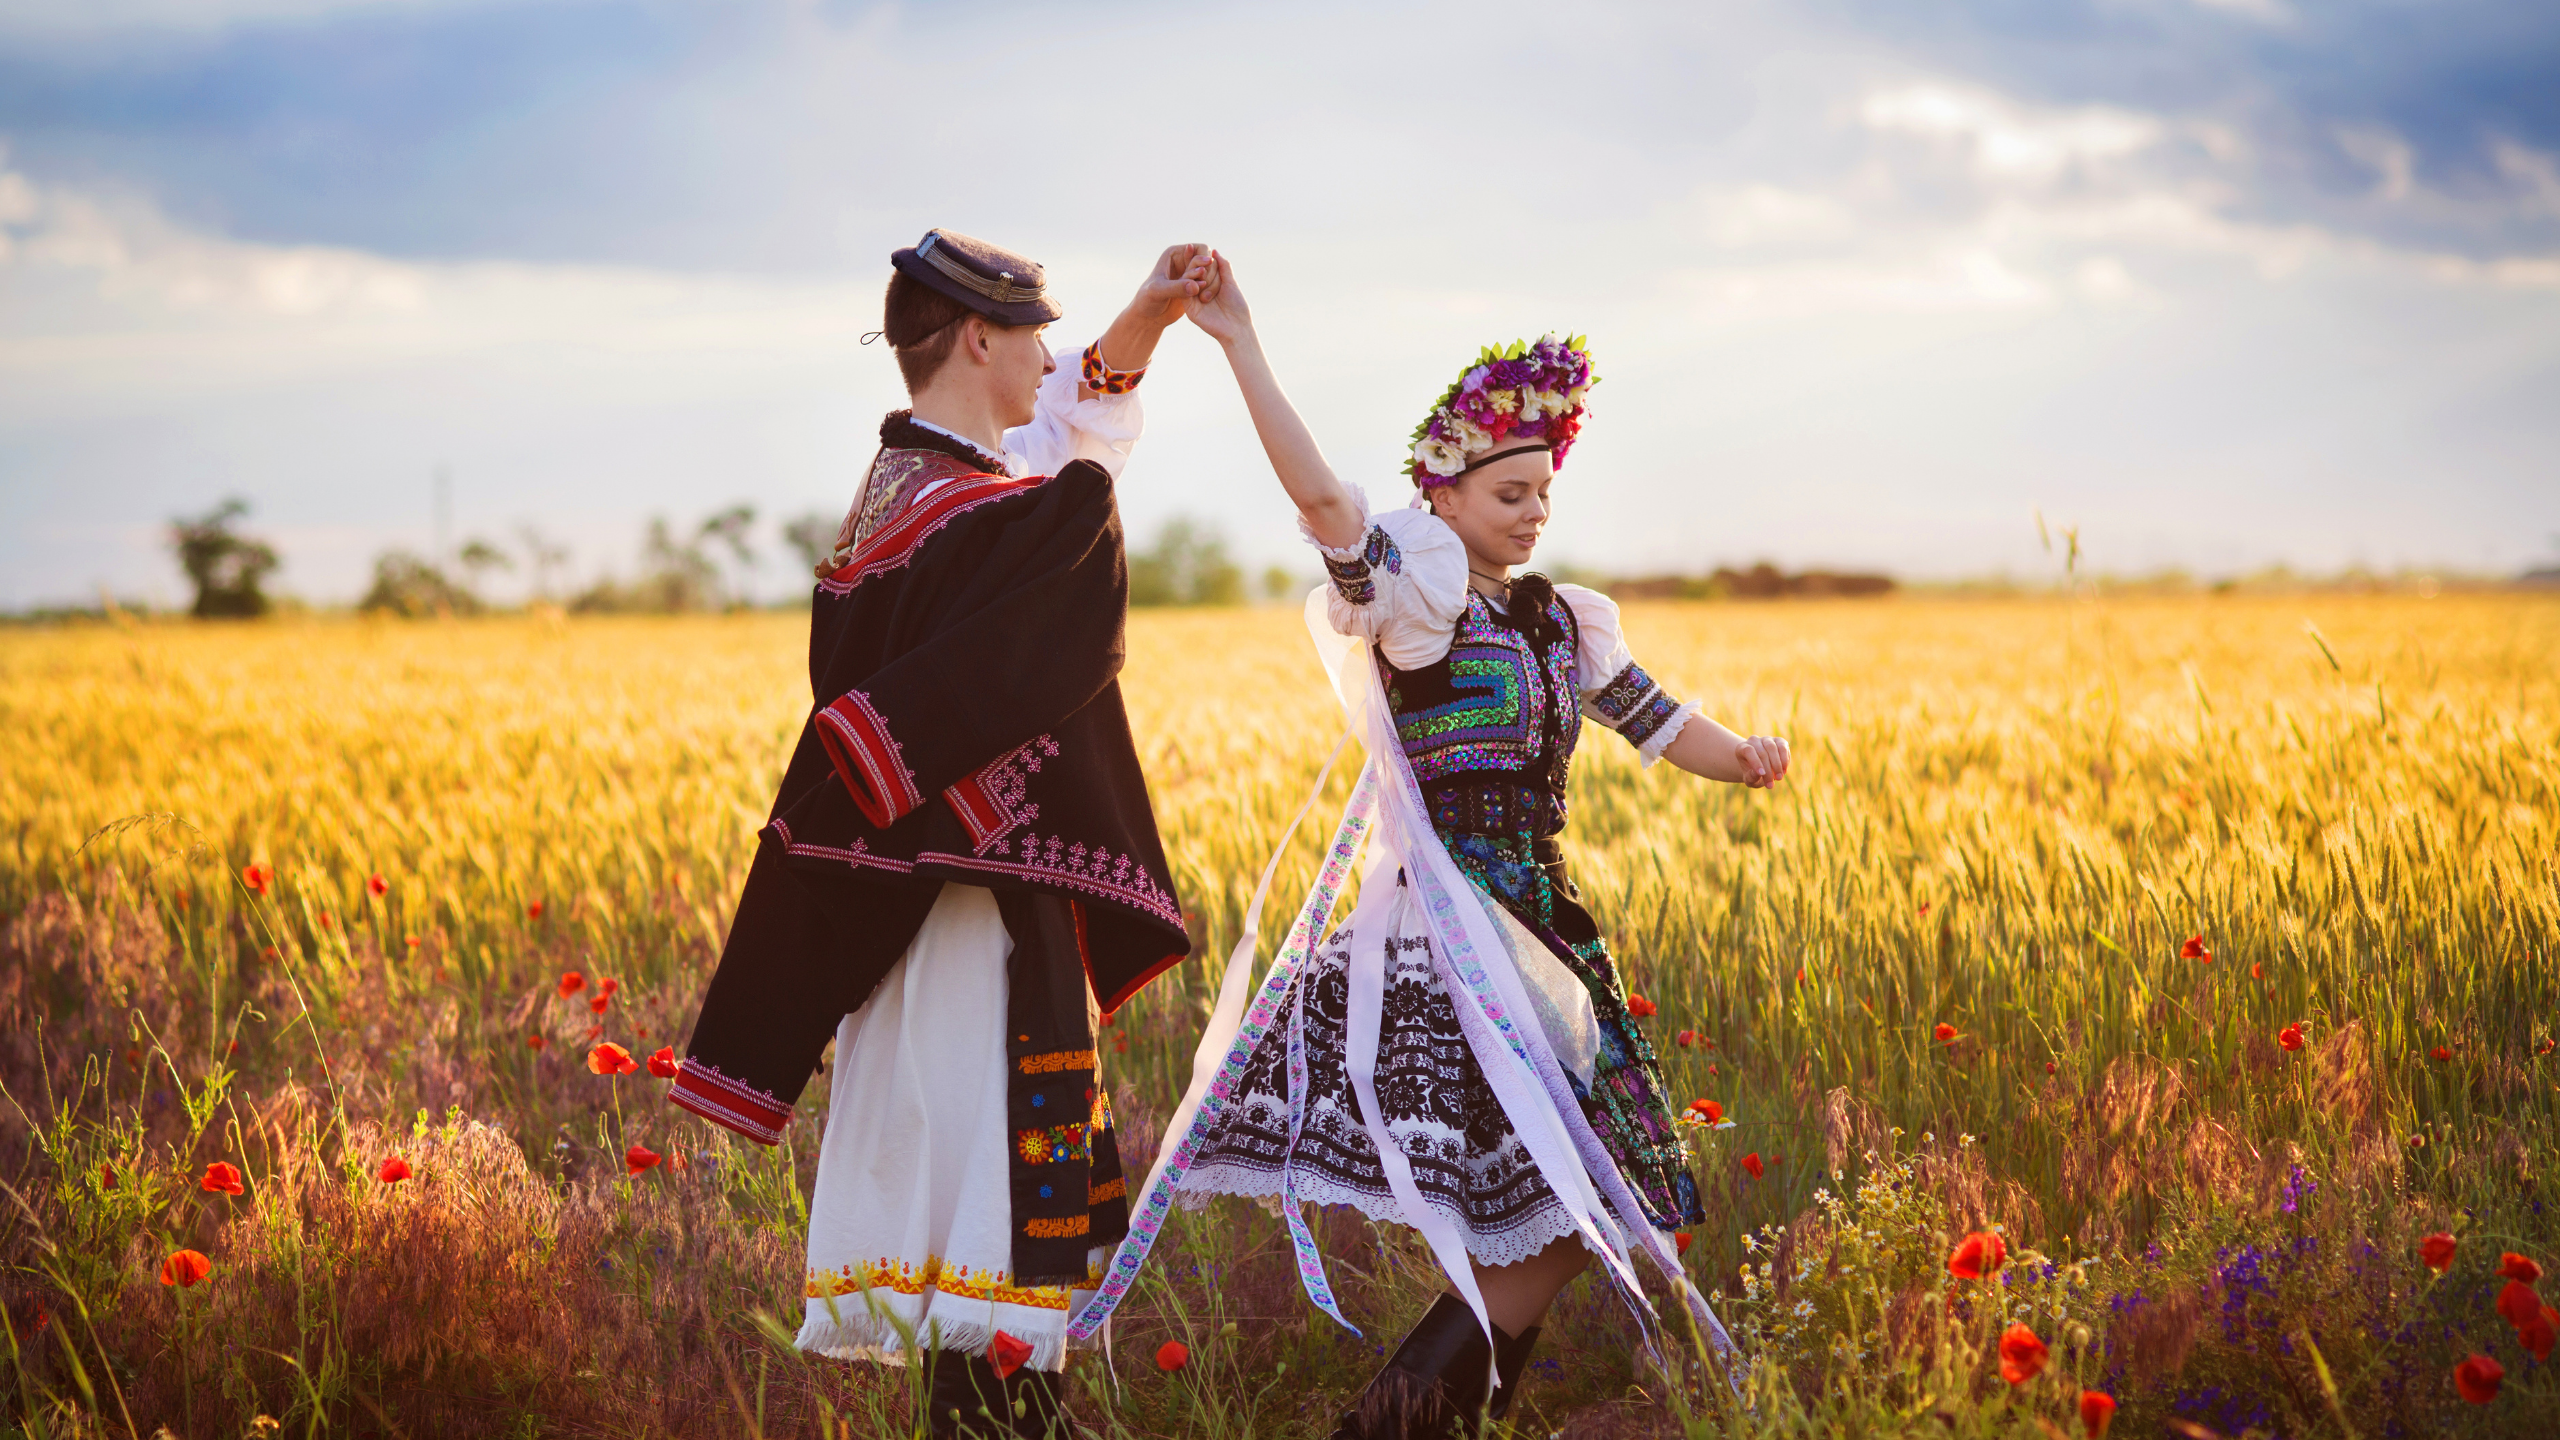 Folk dancing is an important part of Ukrainian culture